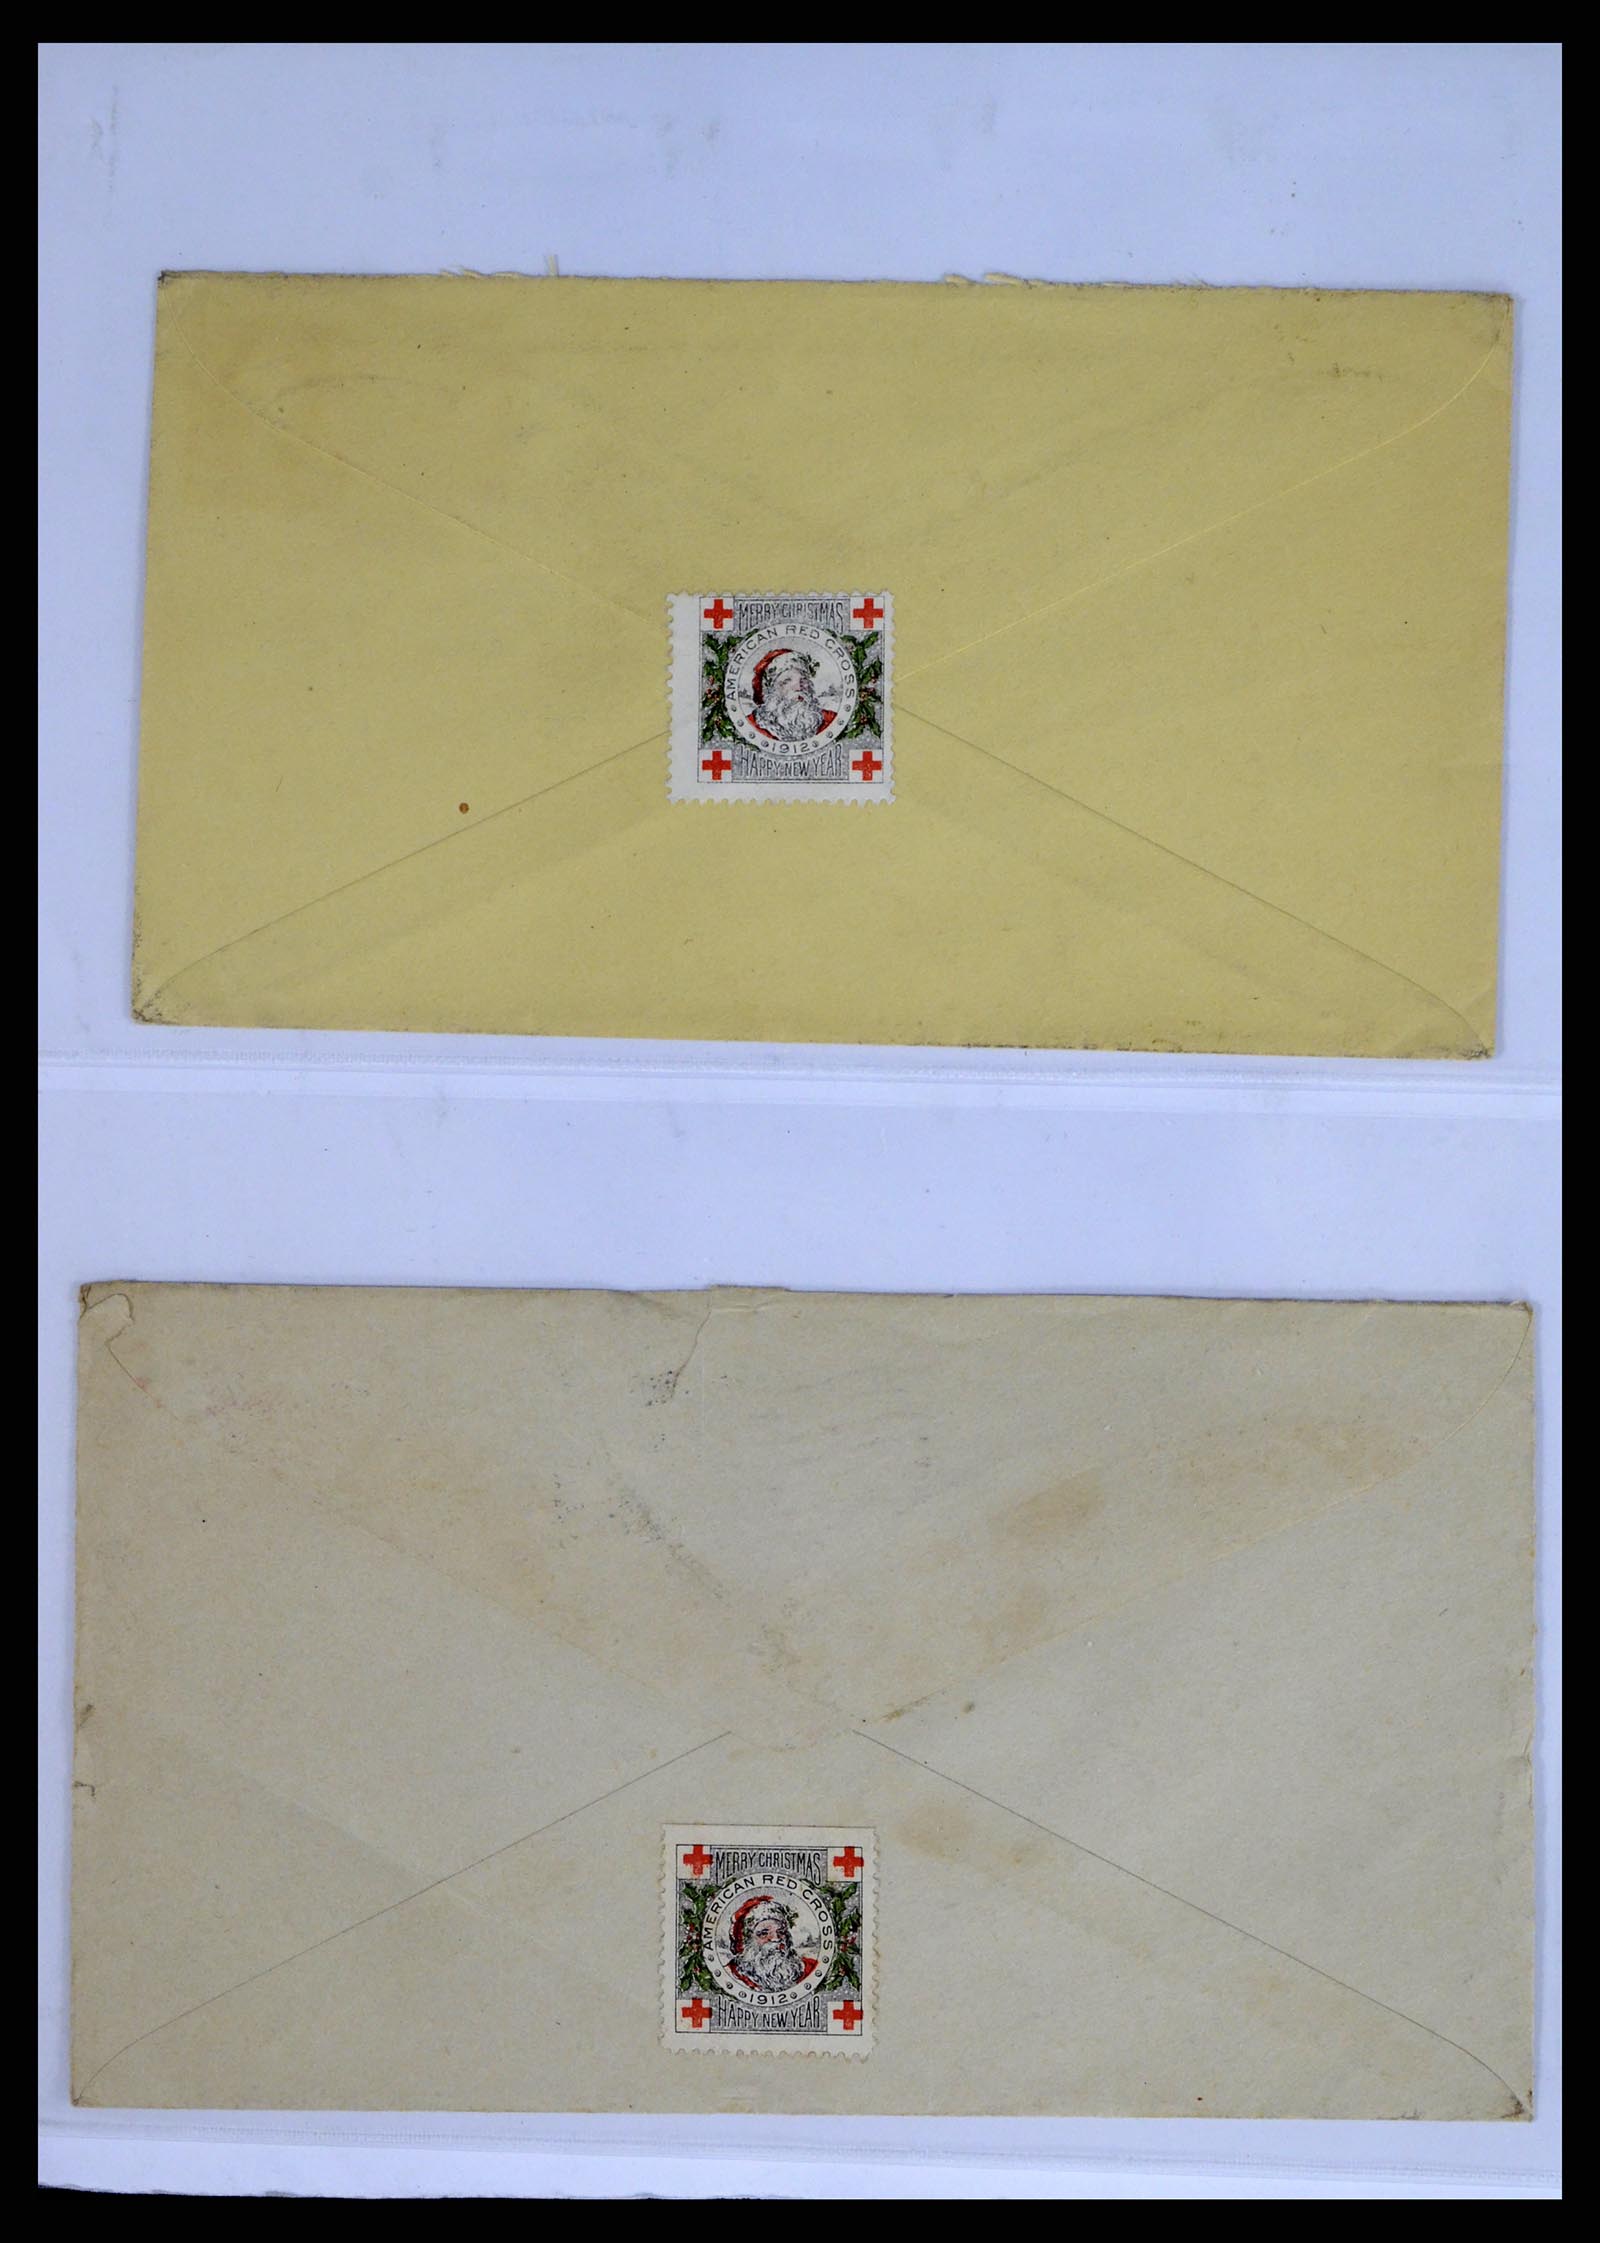 37668 004 - Stamp collection 37668 USA Christmas seals on cover 1908-2009.